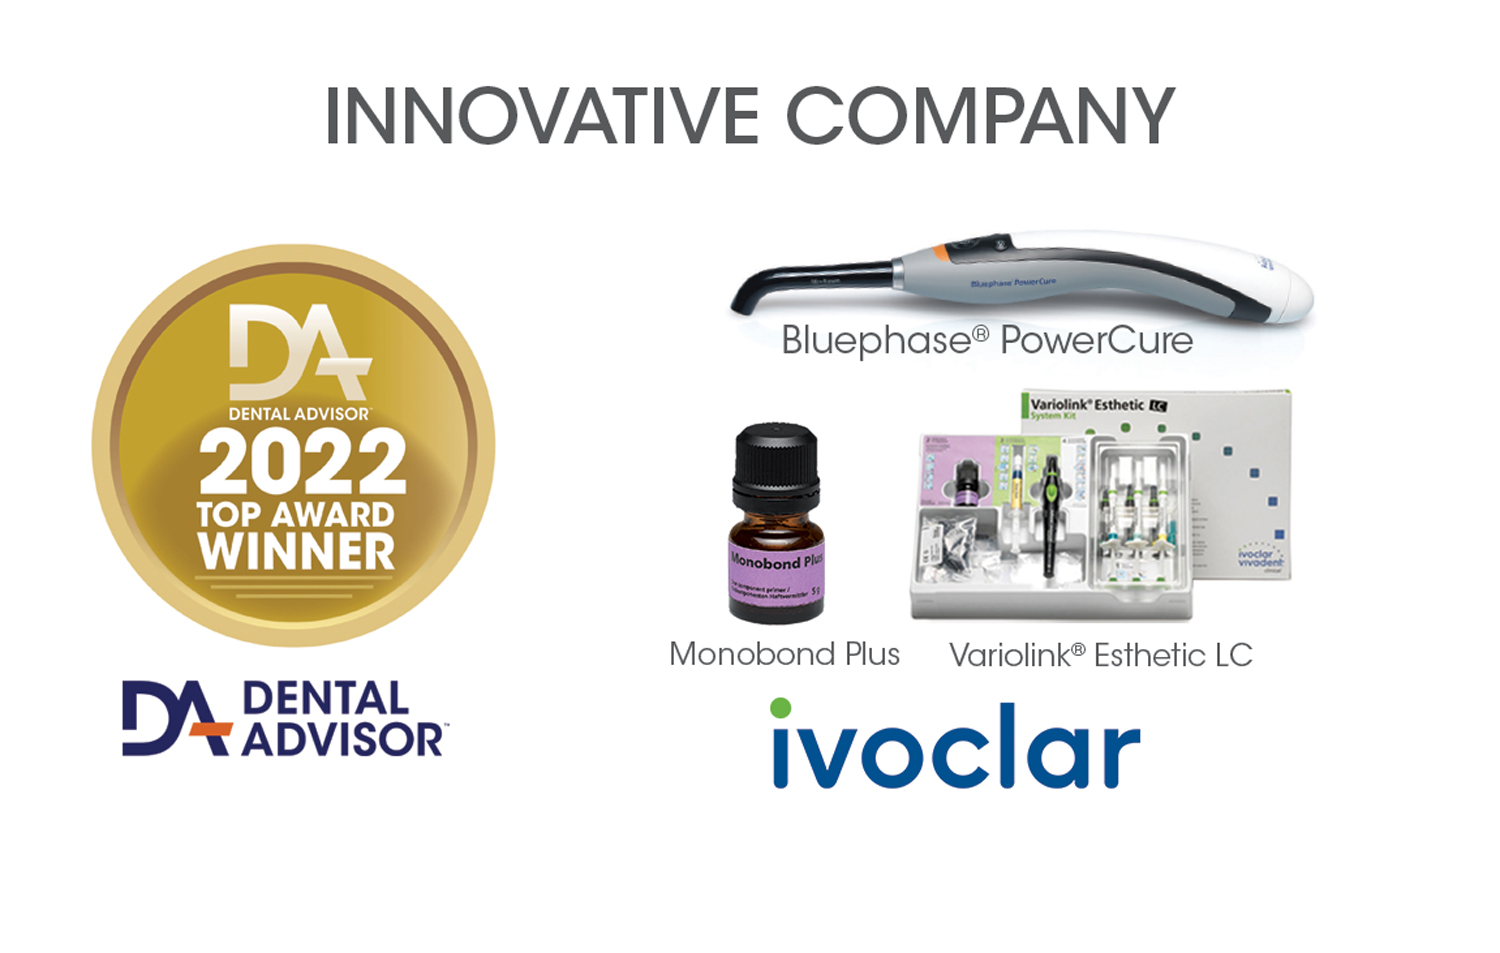 Ivoclar: 2022 Innovative Company of the Year